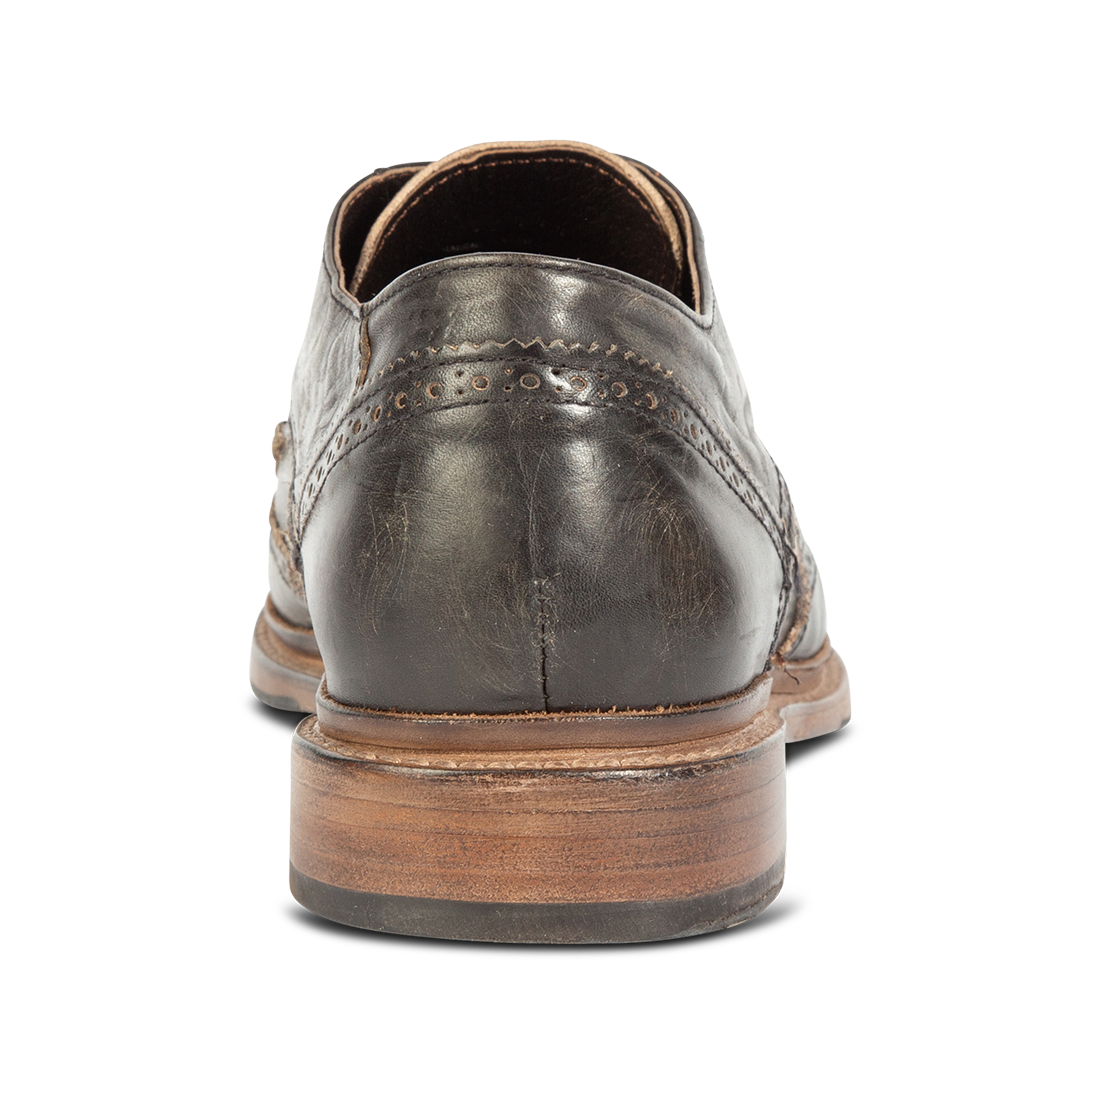 Back view showing low heel on FREEBIRD men's Kensington olive shoe